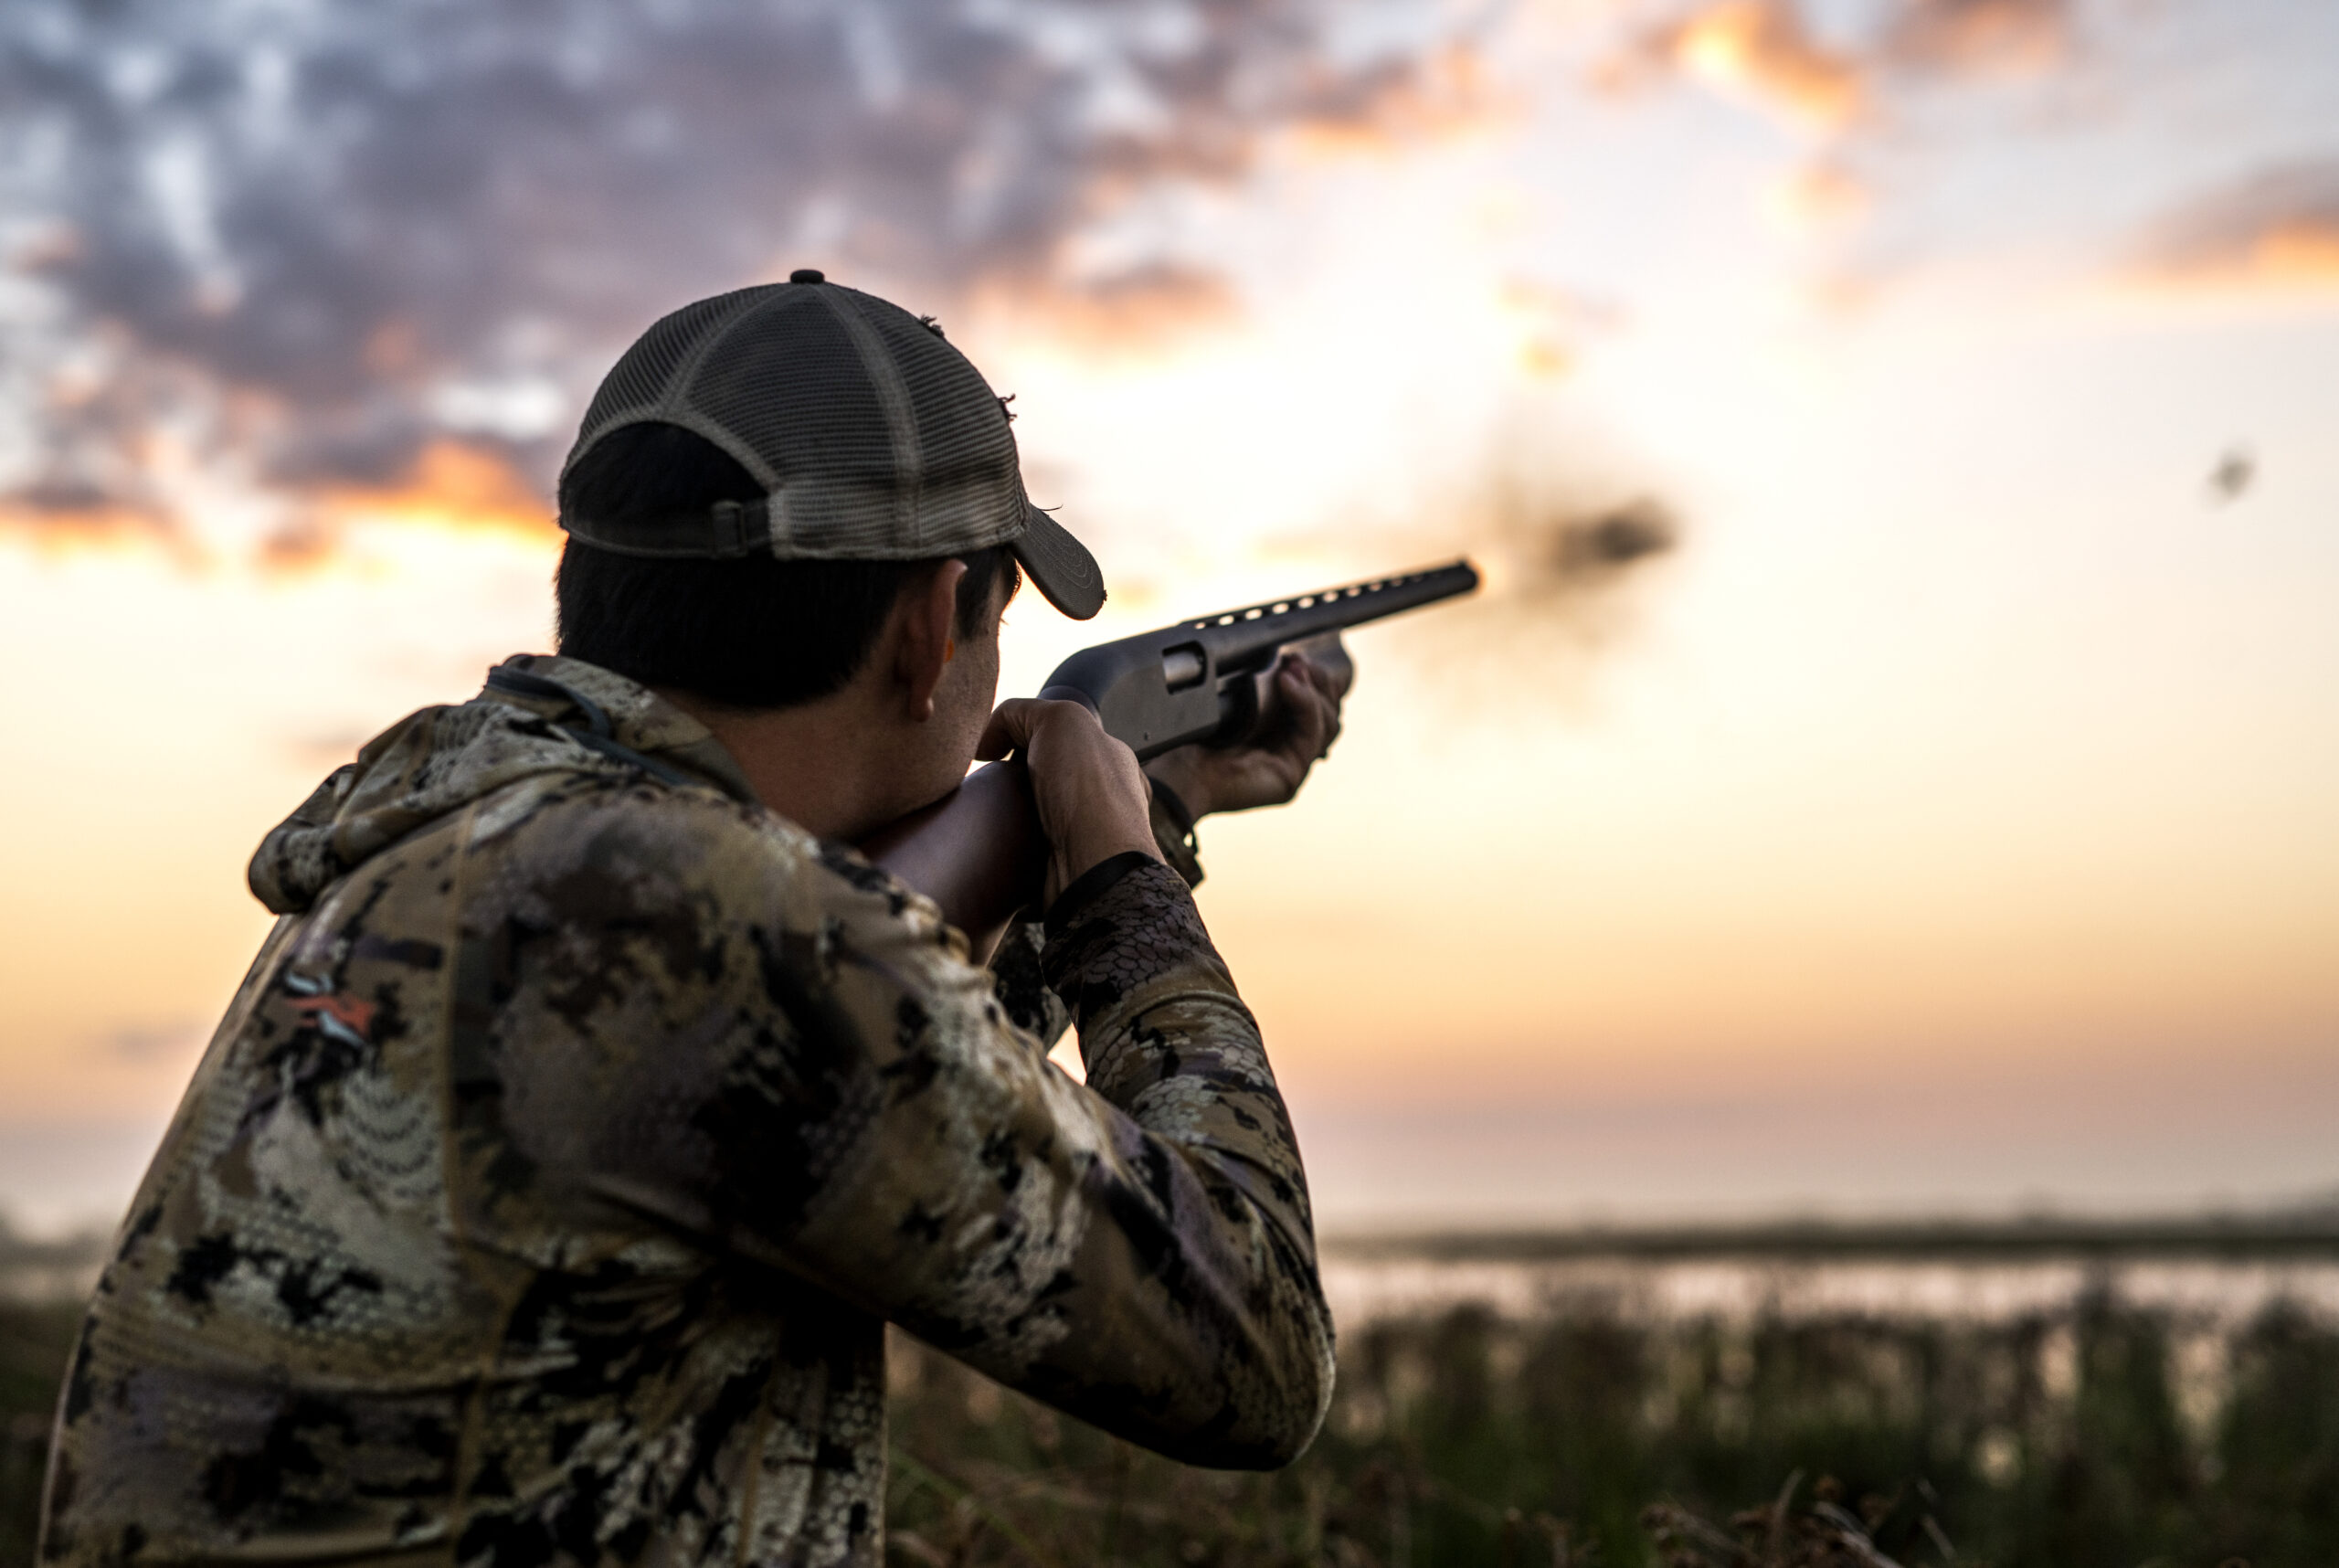 Remington 870 shooting at a duck